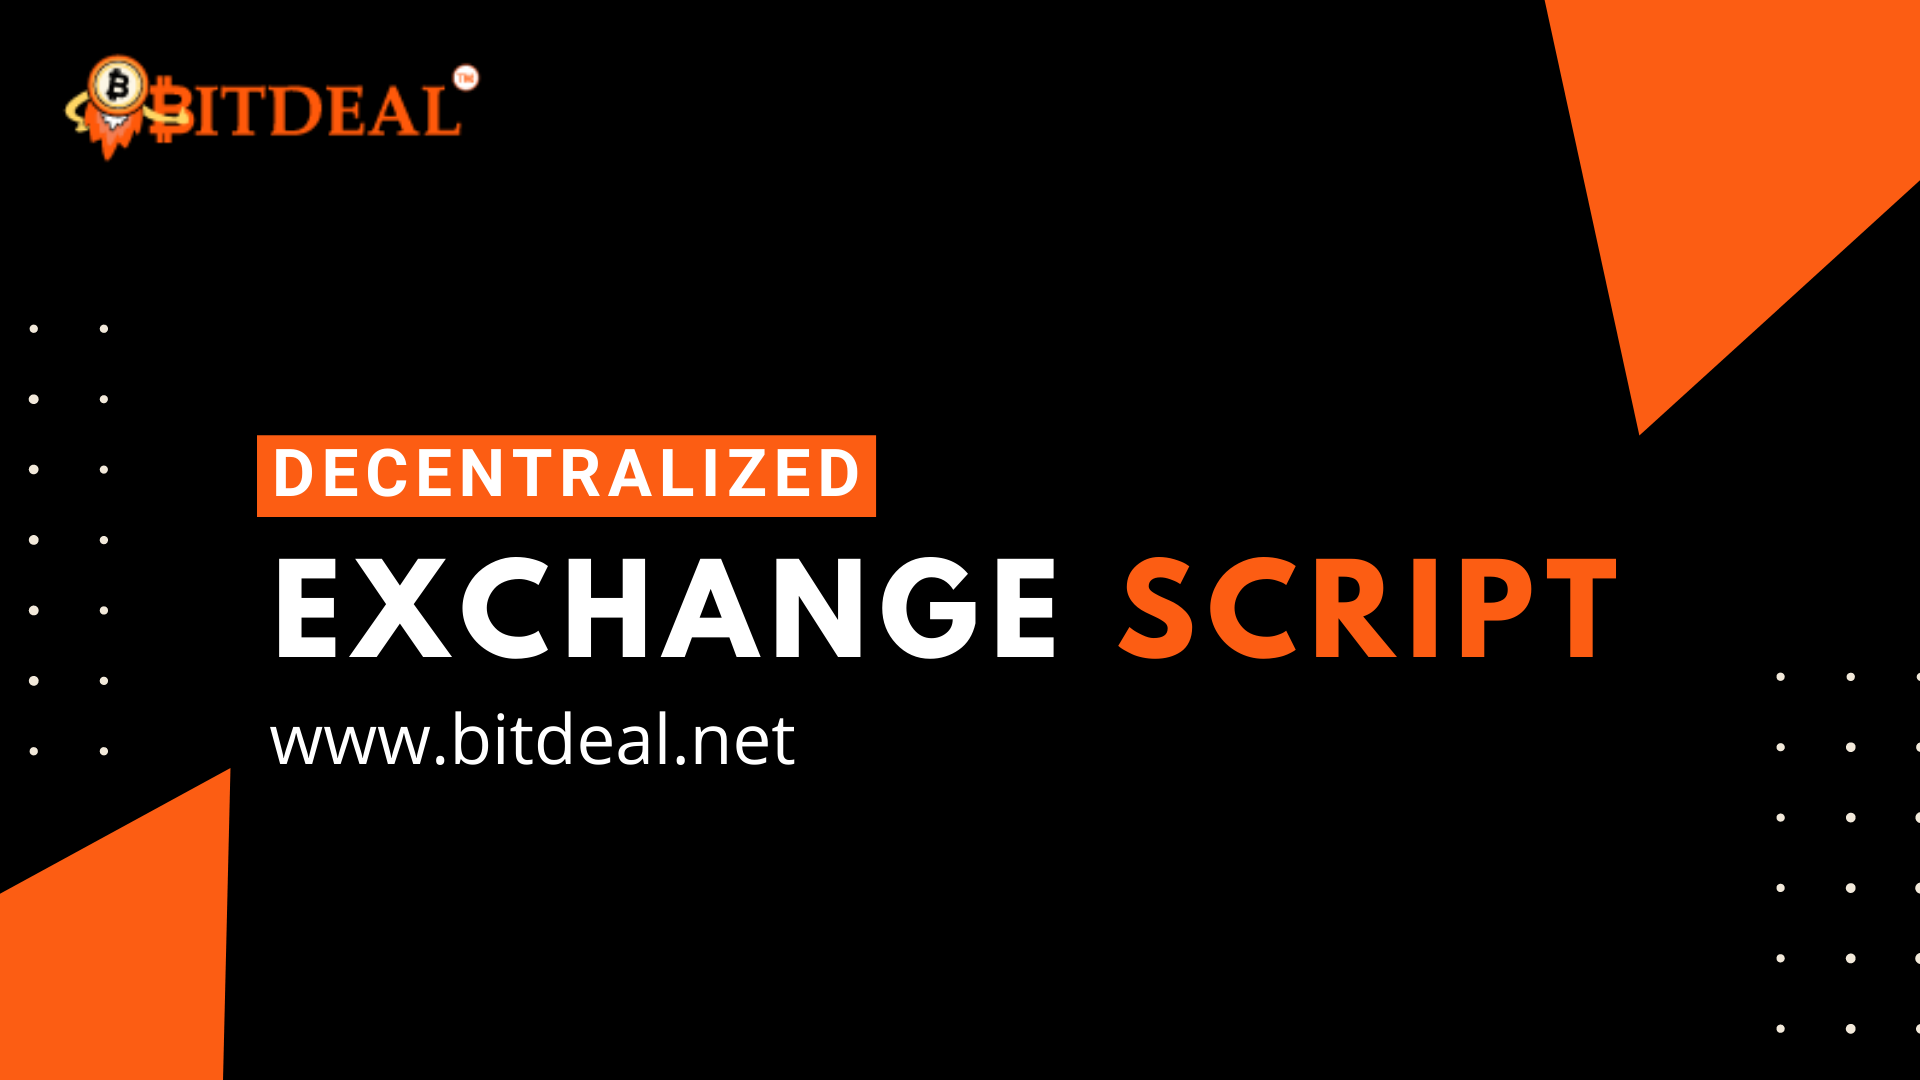 Article about Create DEX Platform With Bitdeal’s Decentralized Exchange Script